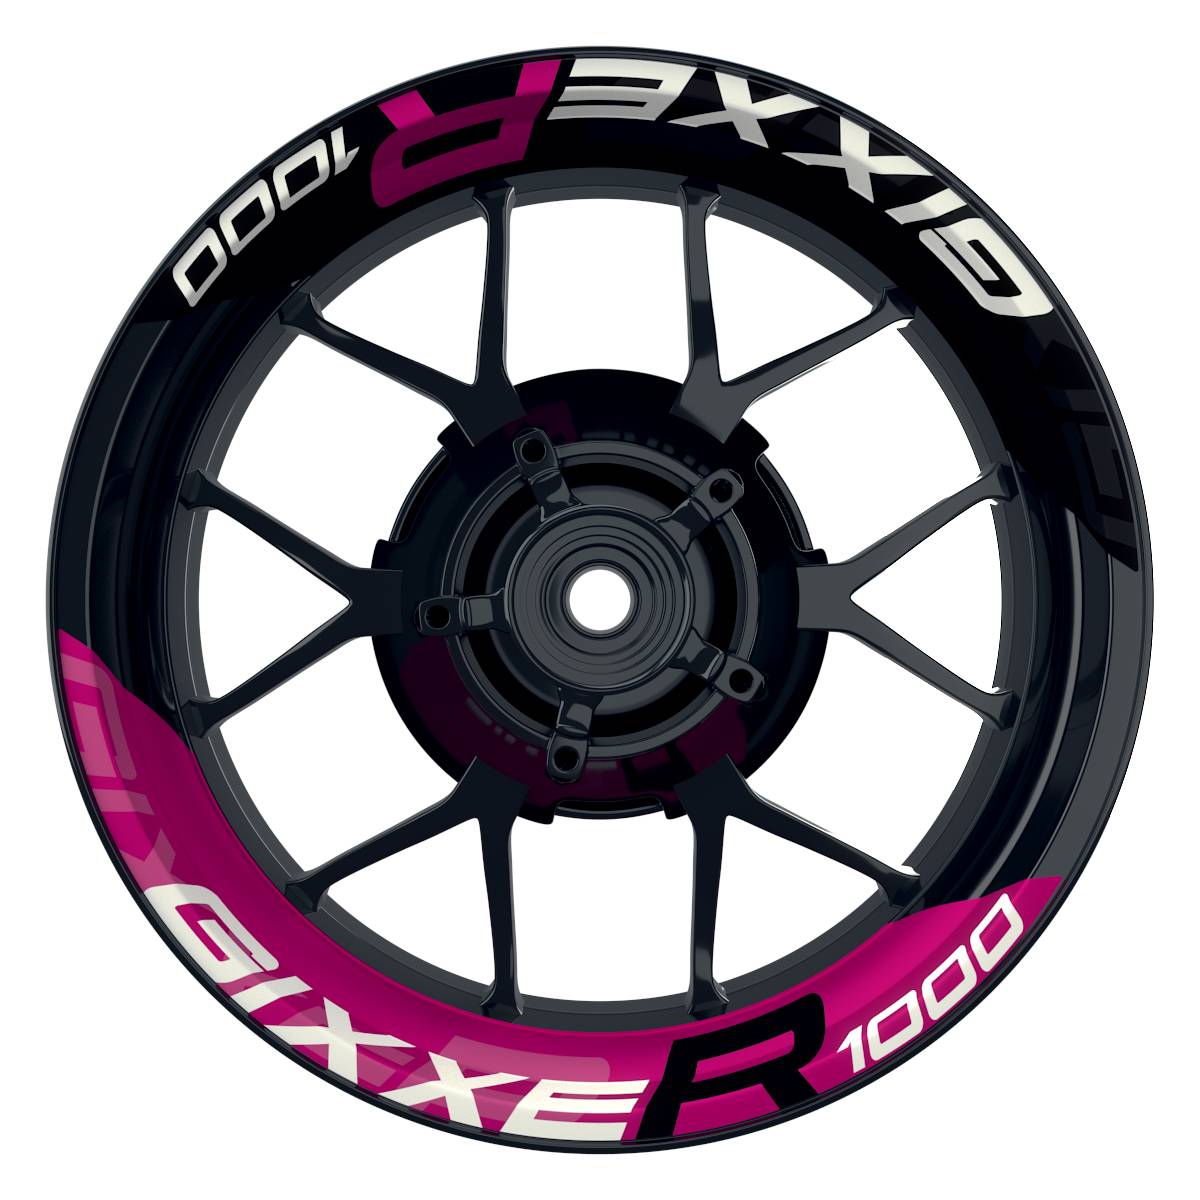 Wheelsticker Felgenaufkleber GIXXER1000 halb halb V2 schwarz pink Frontansicht